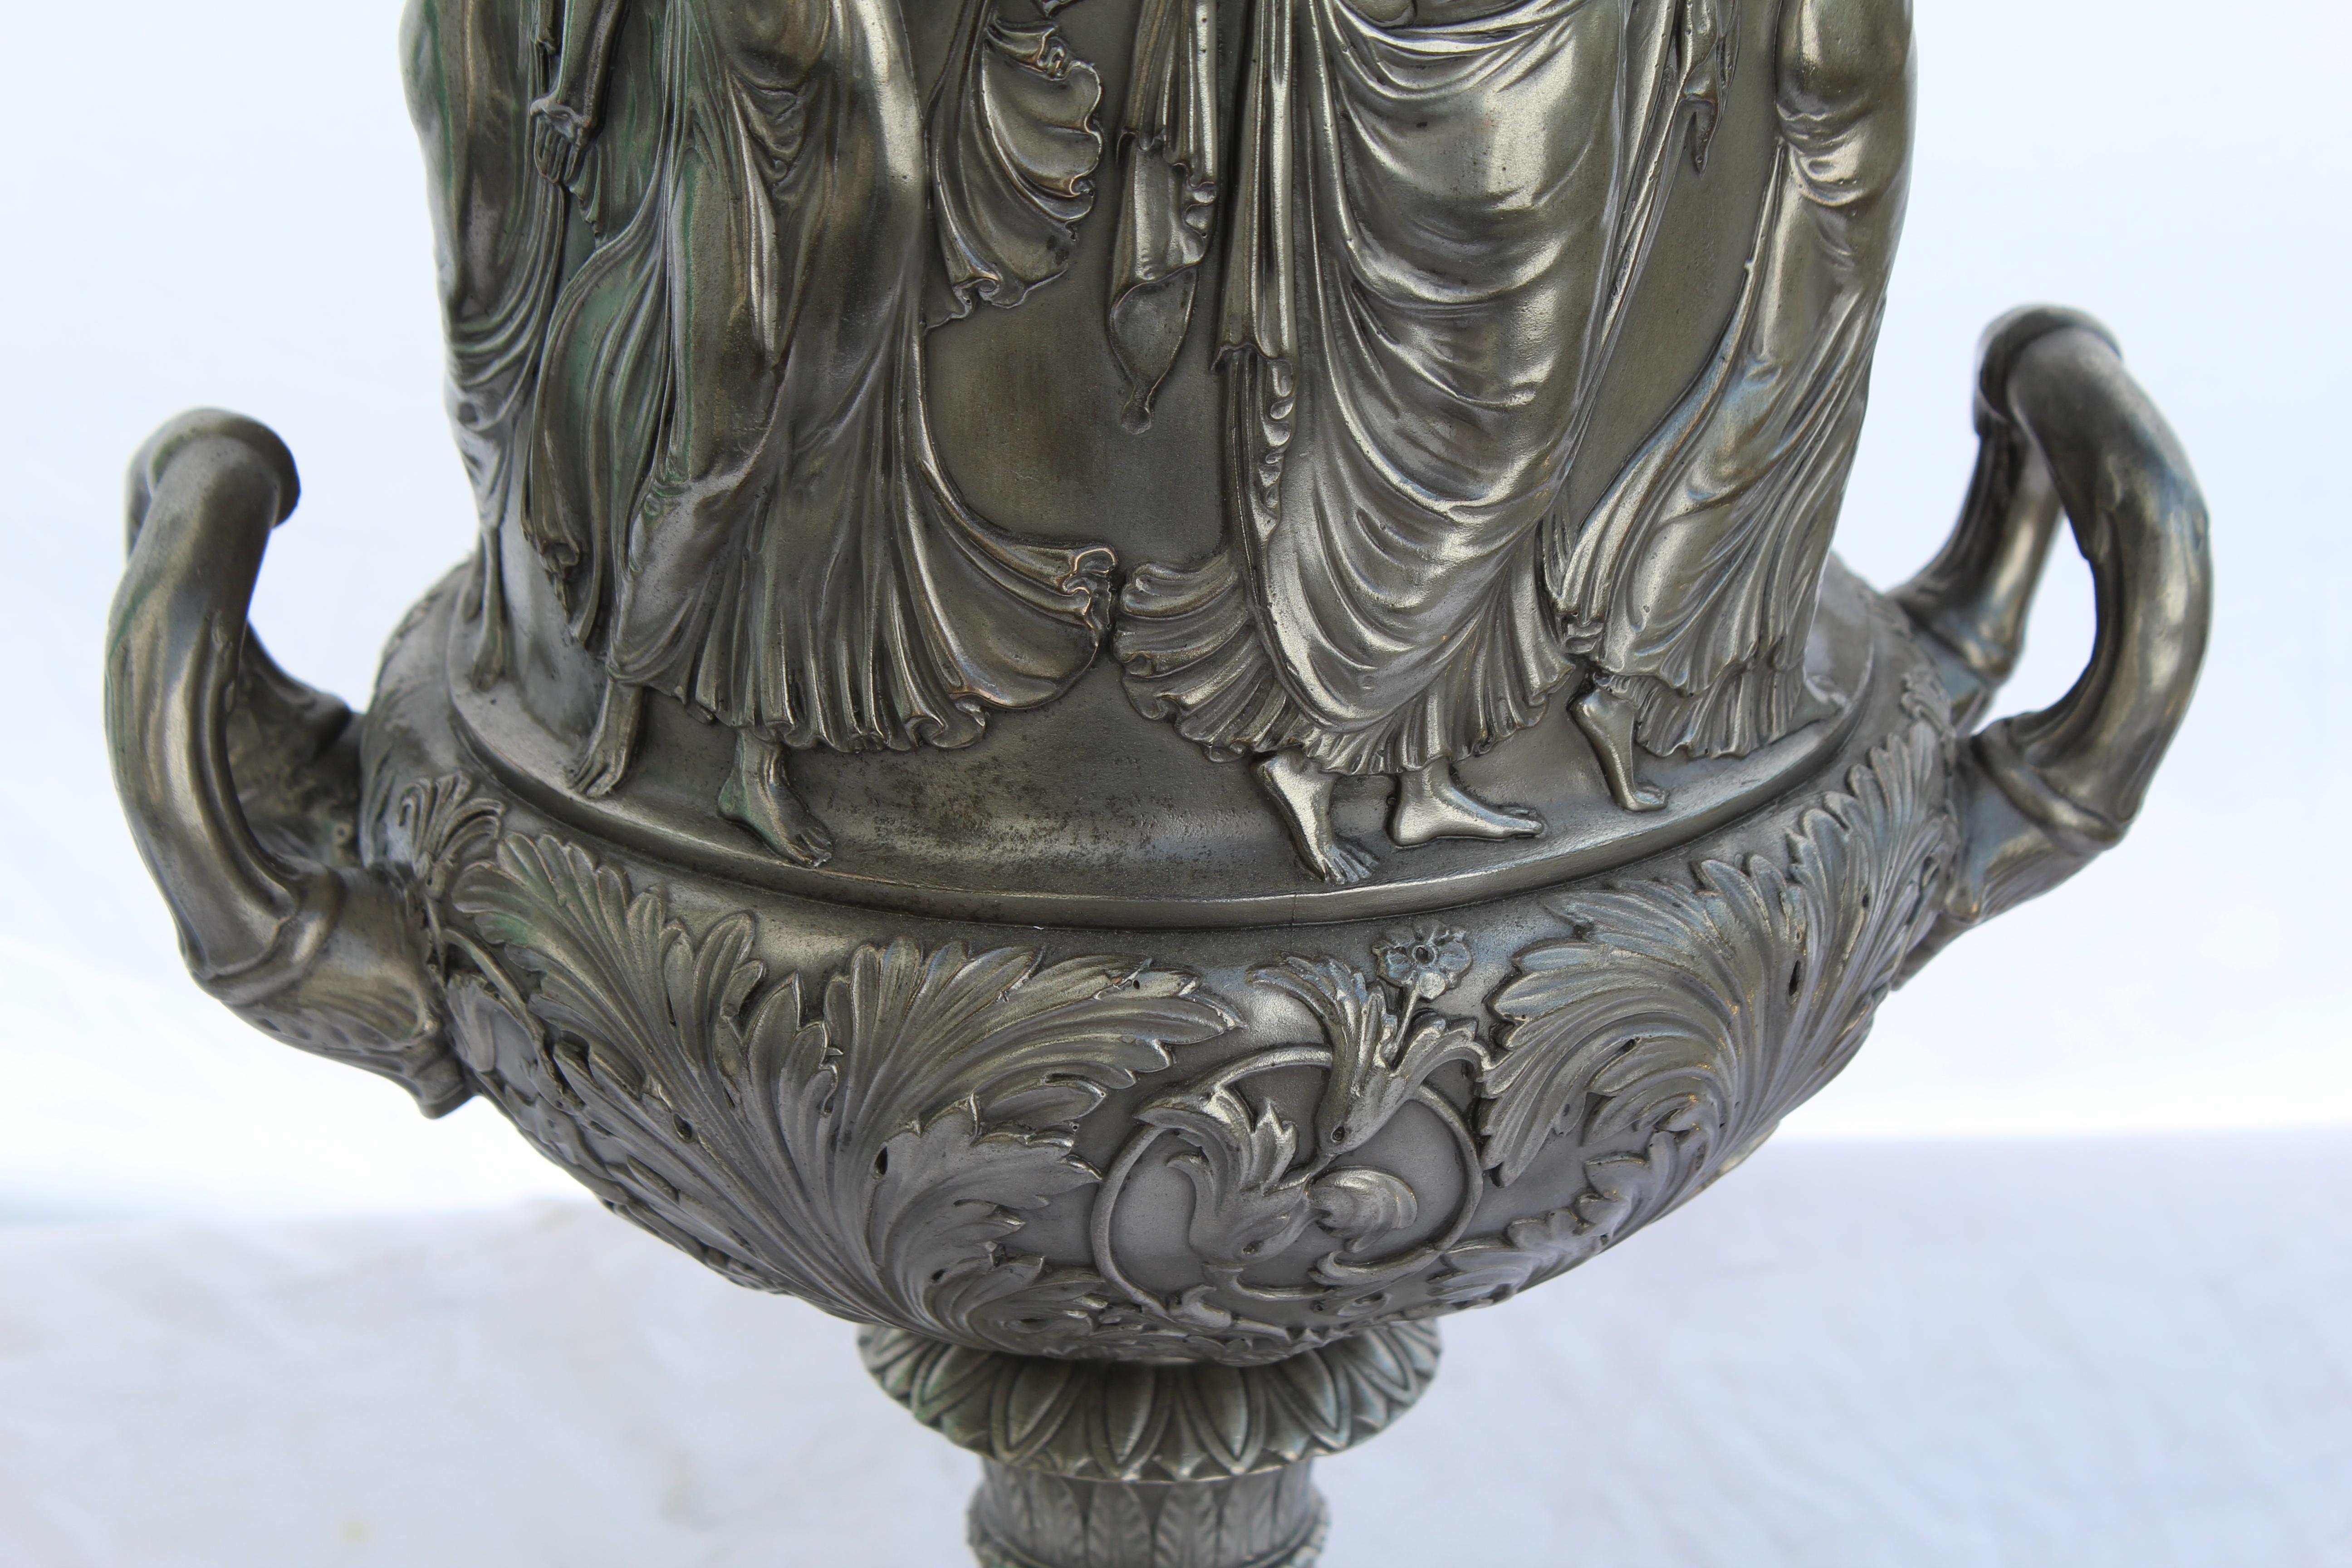 North American Silvered Champagne Bucket, Bronze, Medici Urn Greek Gods dancing Maidens For Sale